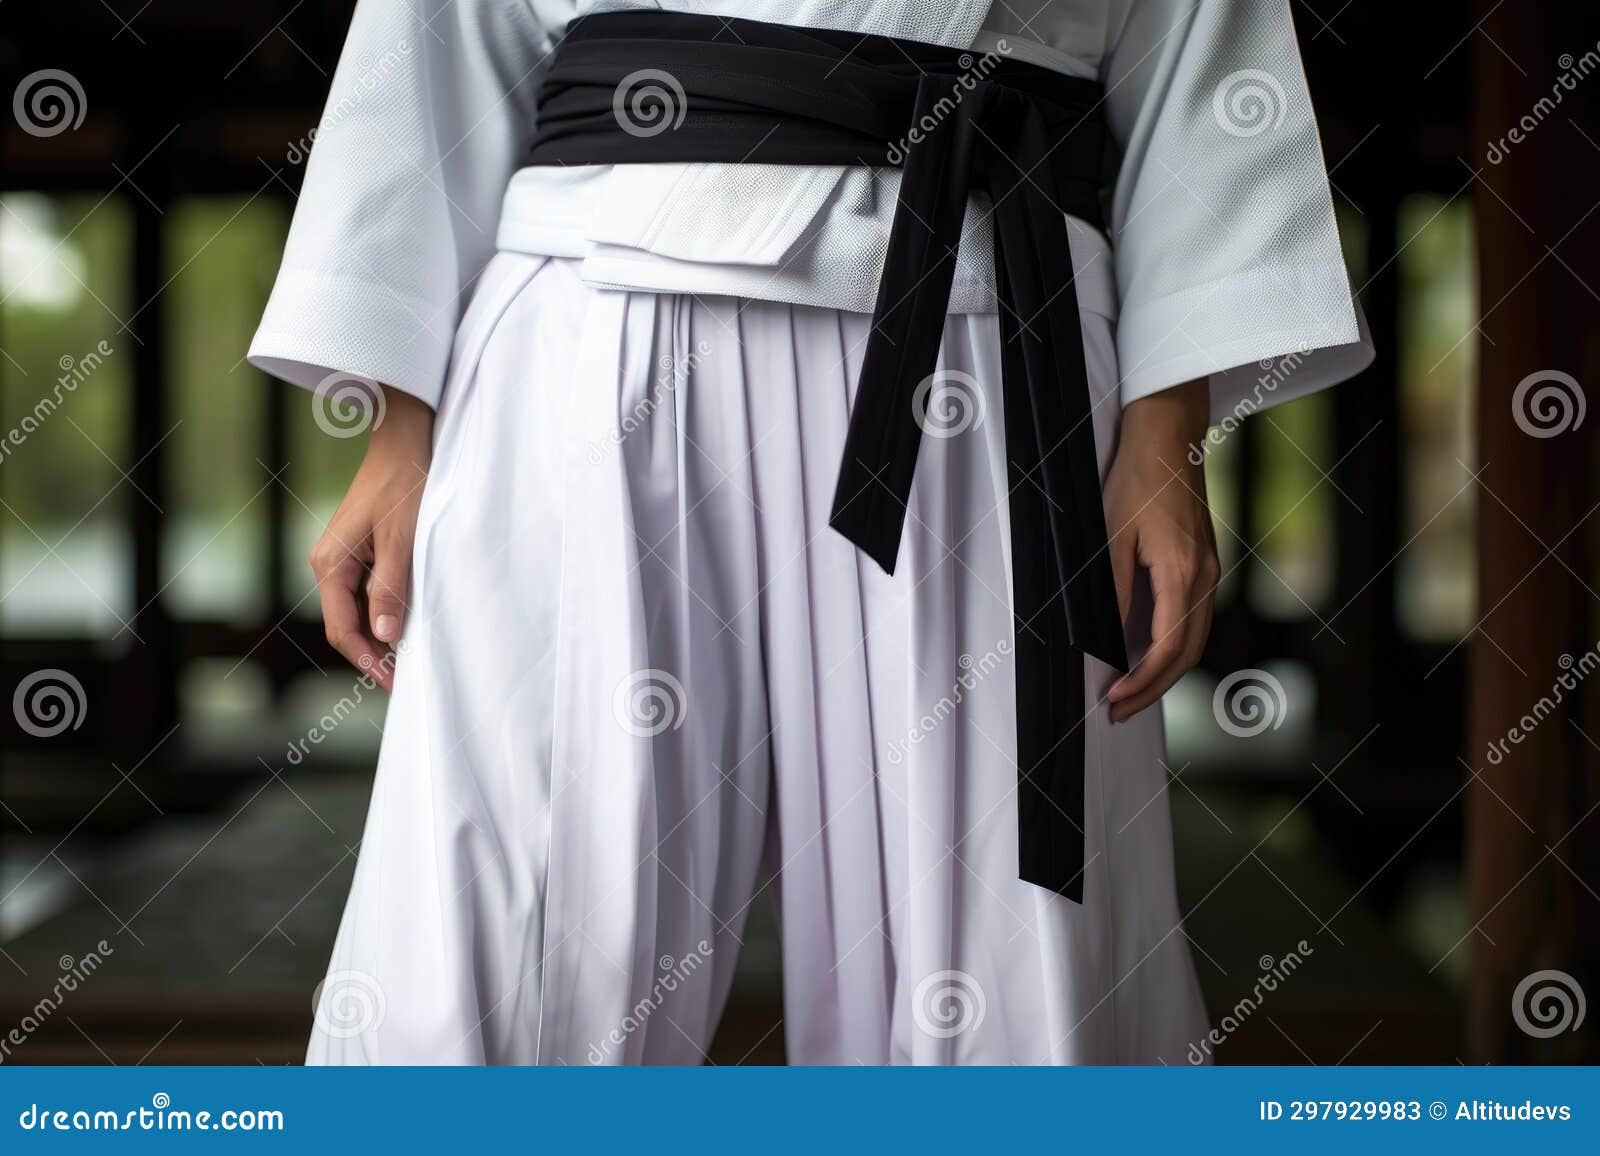 Close-up of Aikido Uniform with Black Belt and Hakama Pants Stock Image ...